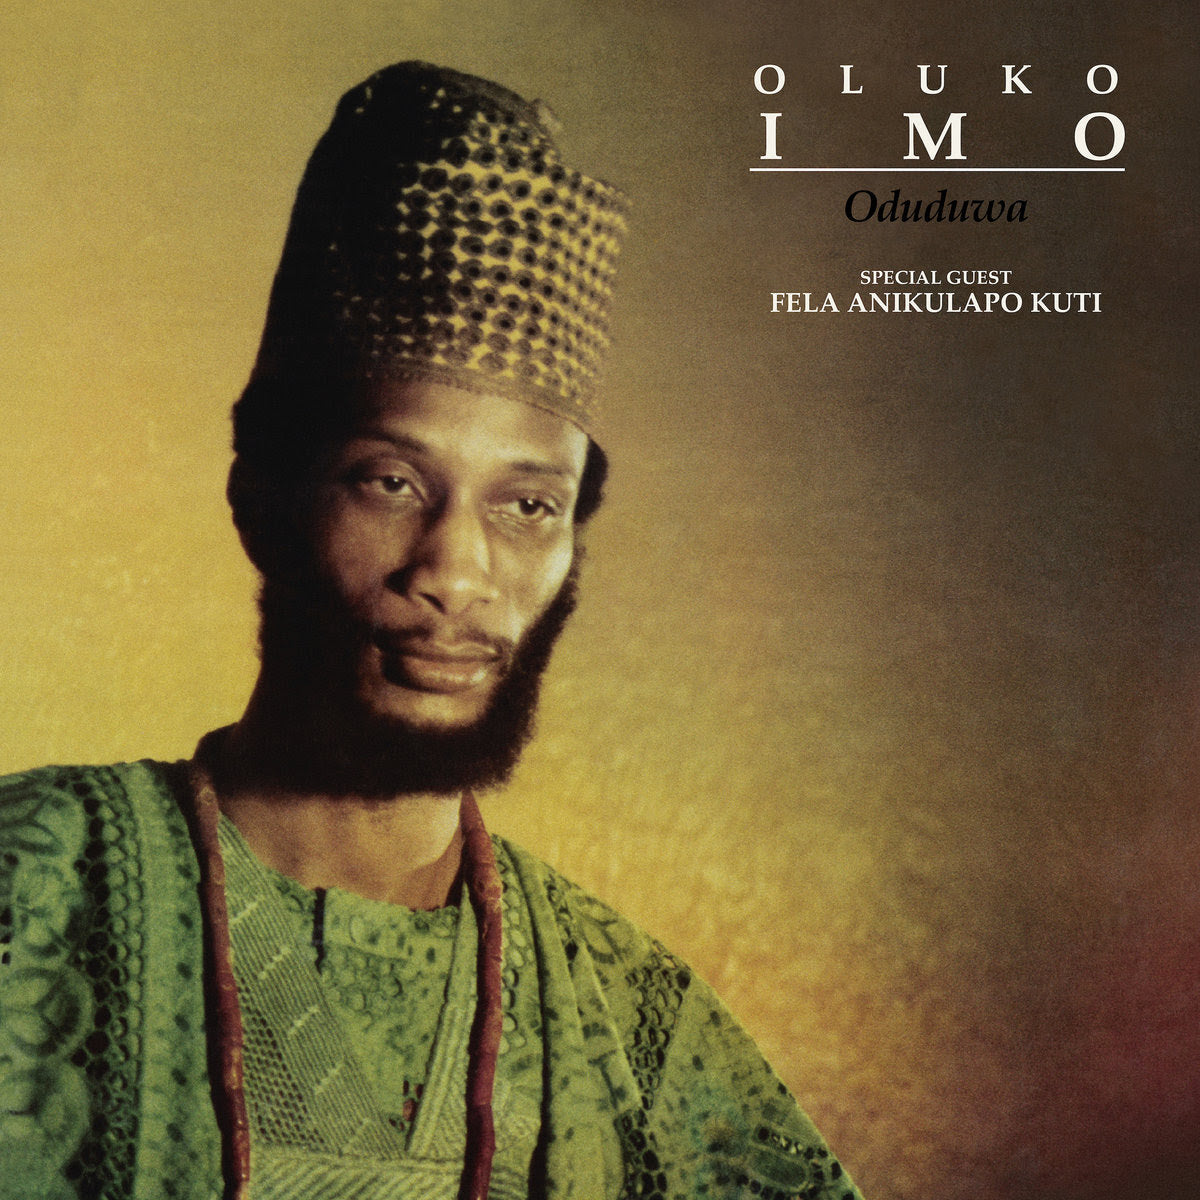 Oluko Imo - Oduduwa 12" | Buy the Vinyl LP from Flying Nun Records